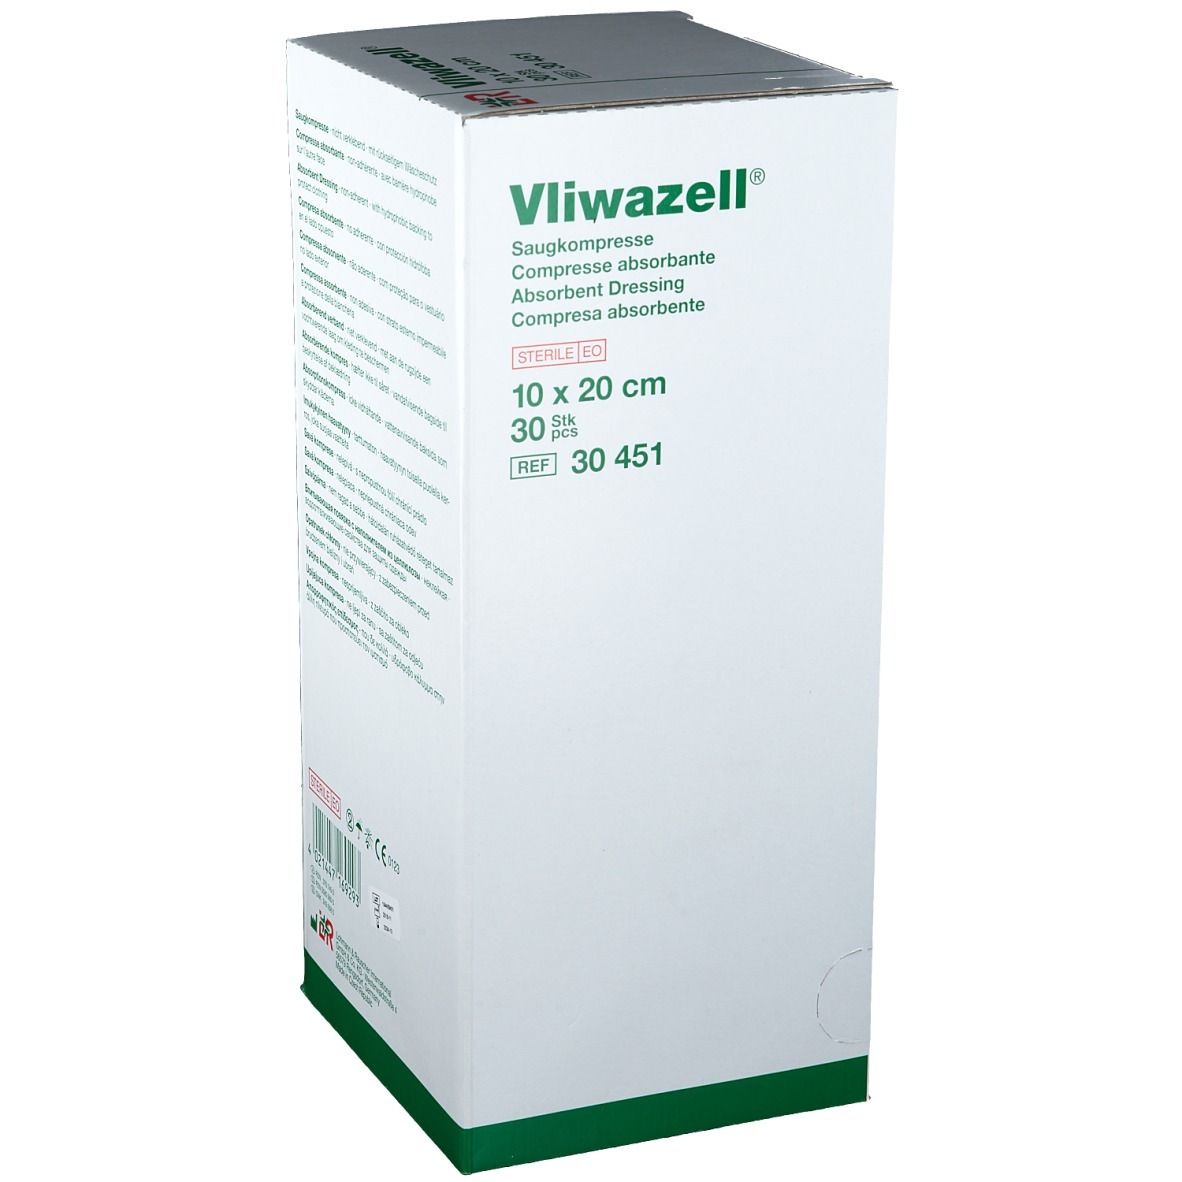 Vliwazell® hochsaugfähige Universalkompresse steril 10 cm x 20 cm